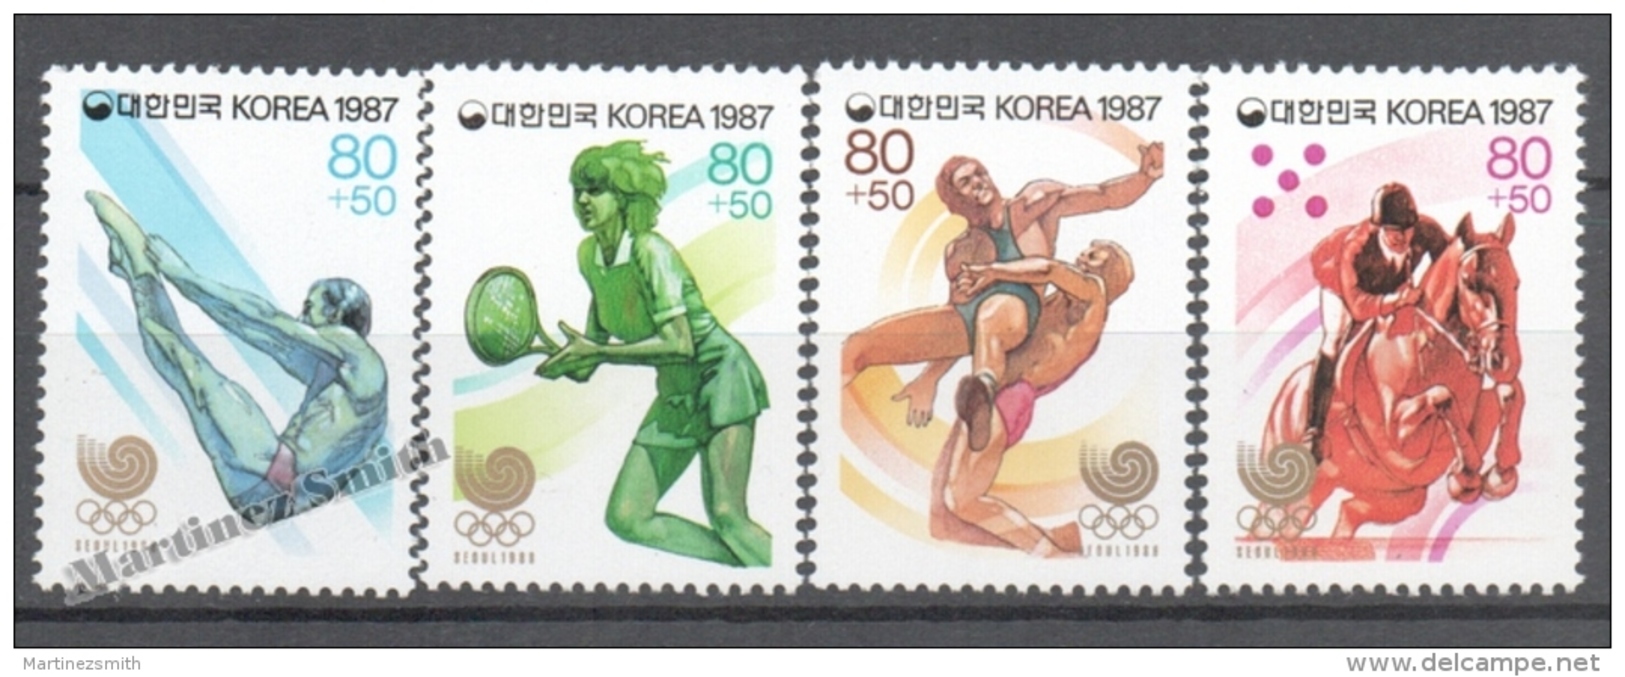 South Korea 1987 Yvert 1363-66, Seoul Headquarters Of The 1988 Olympic Games - MNH - Korea (Zuid)